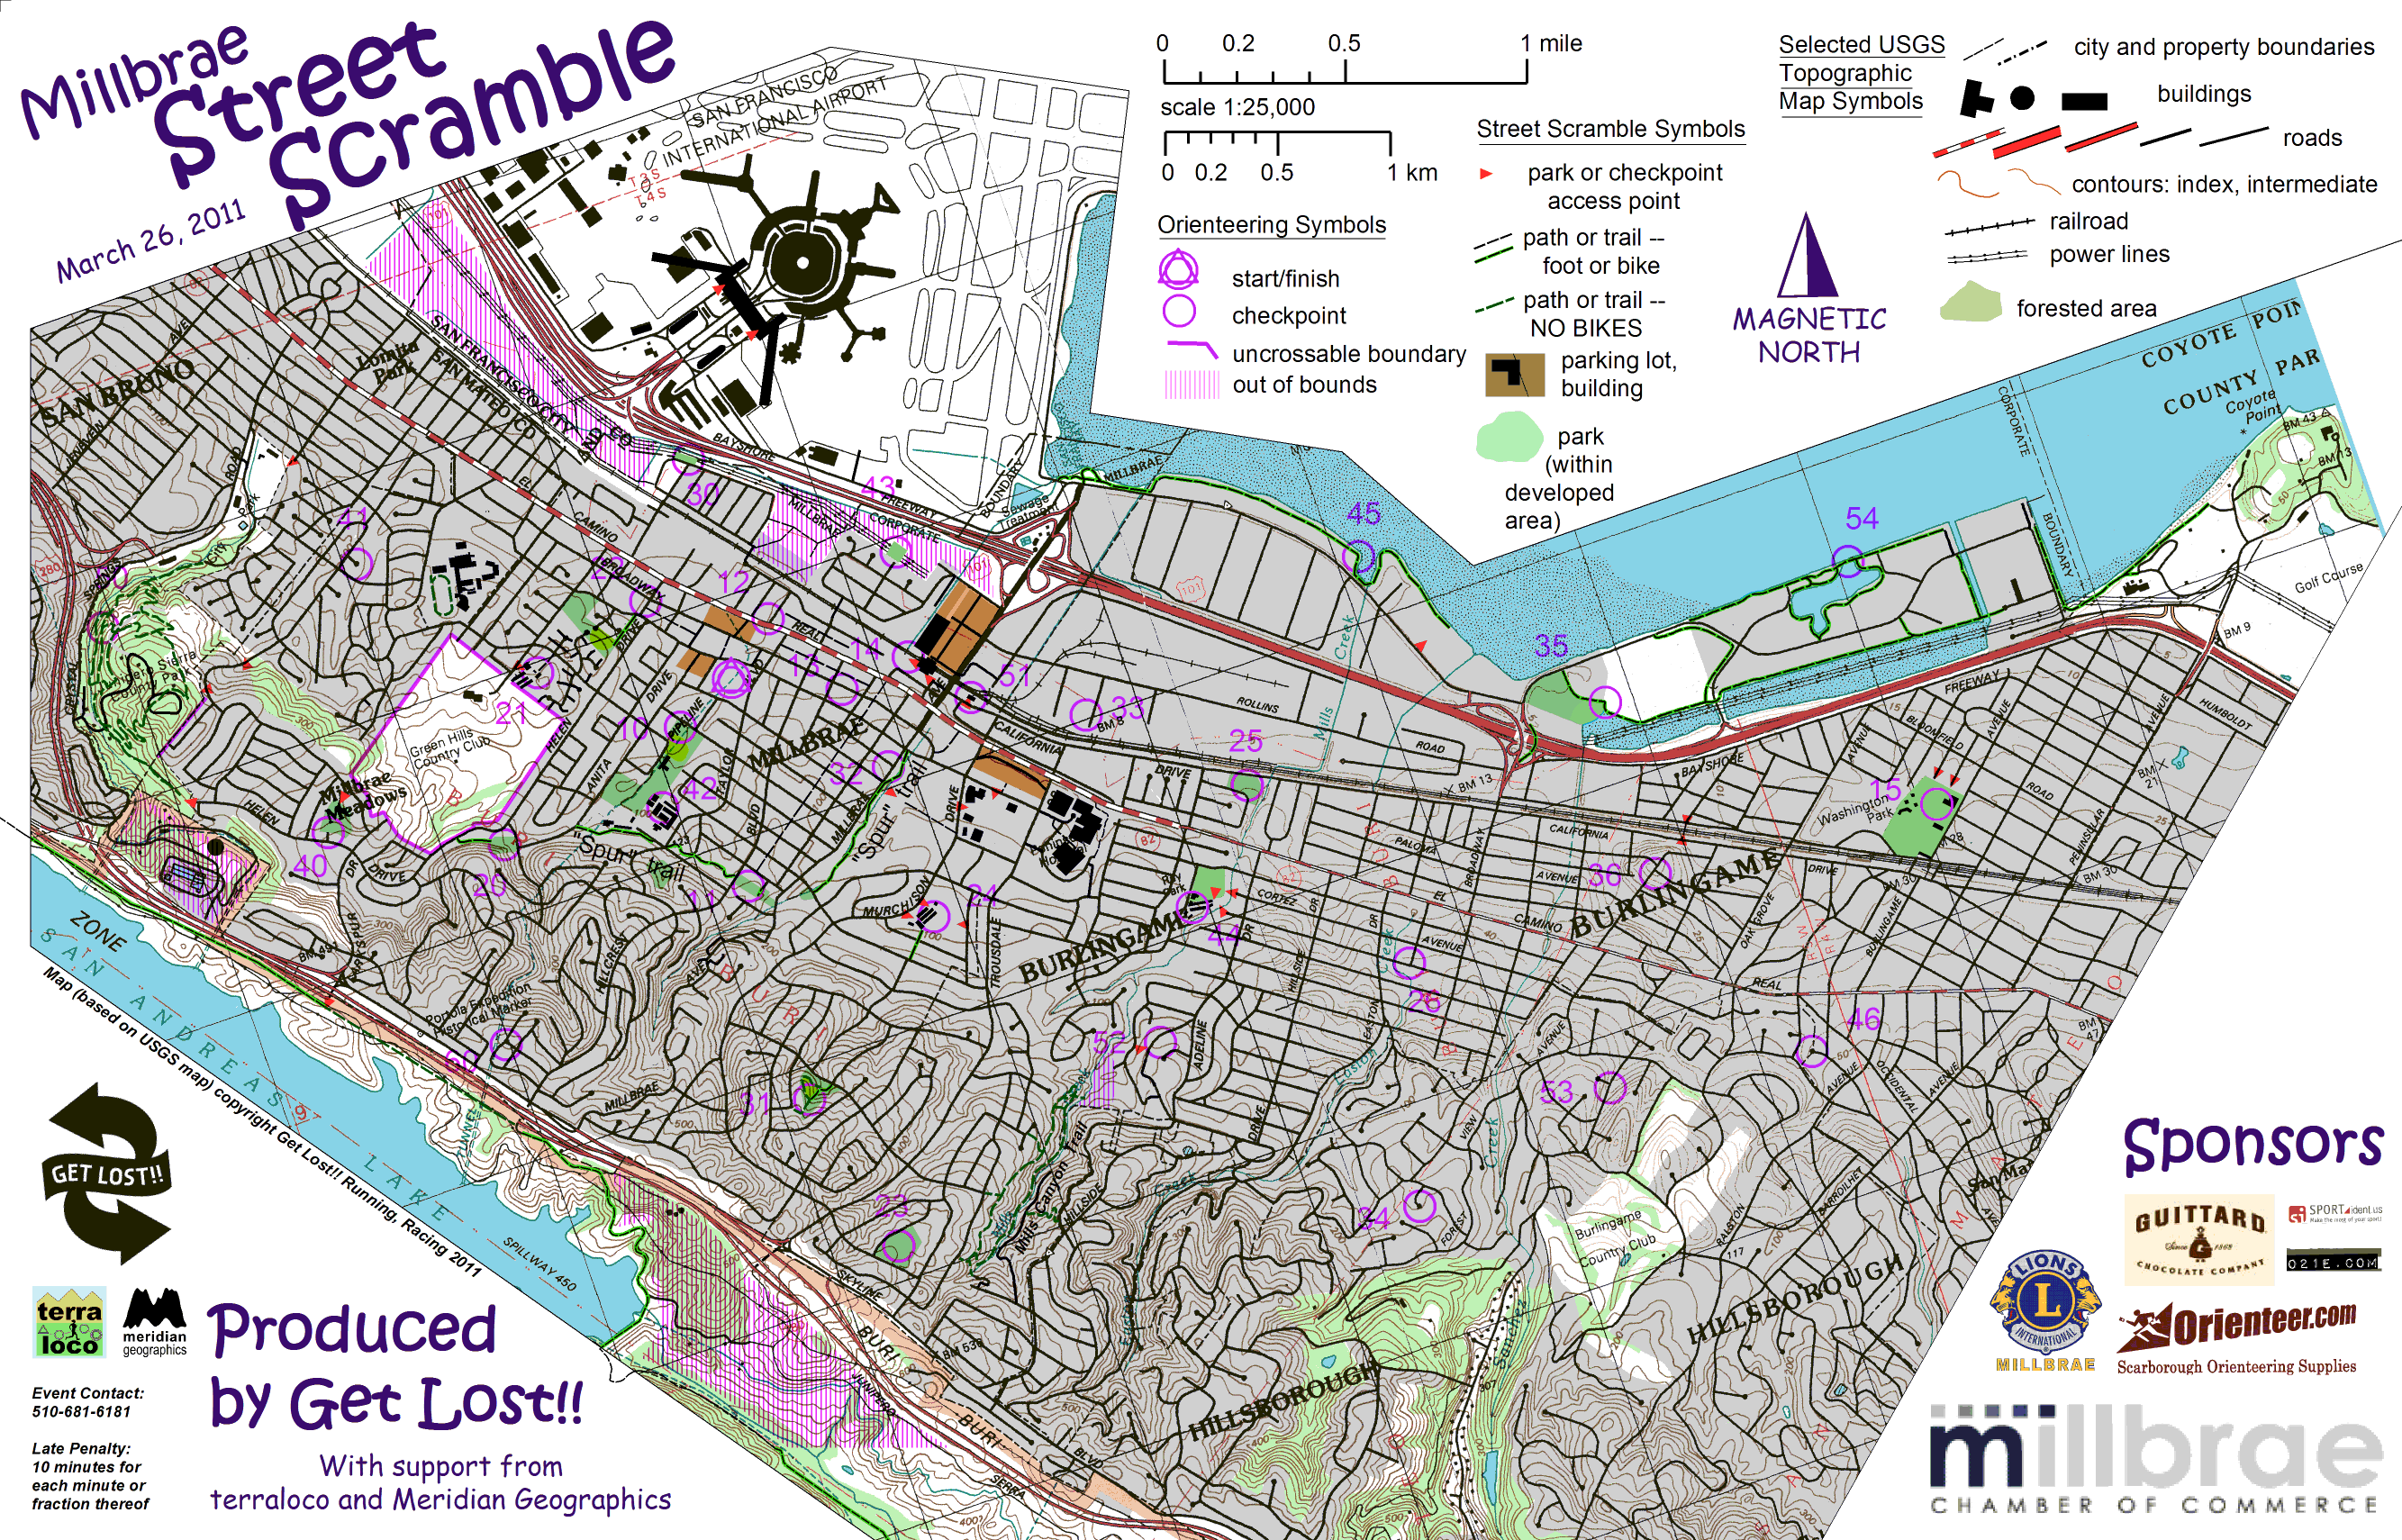 Millbrae Street Scramble 2011 map